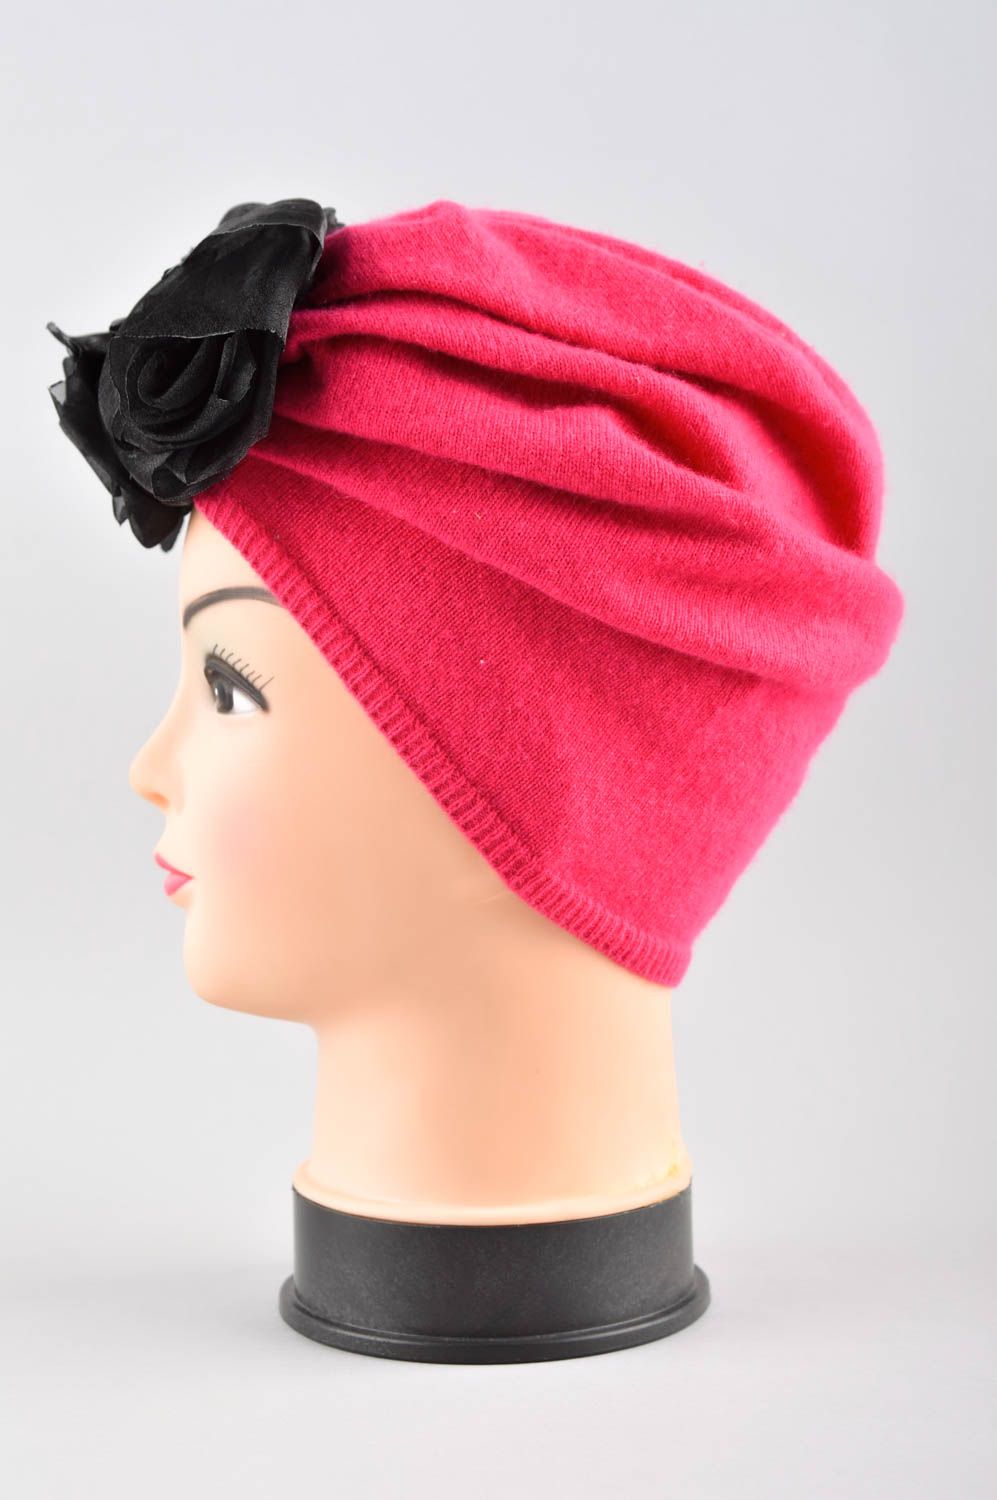 Handmade mittens pink winter hat designer winter accessory set for women photo 3